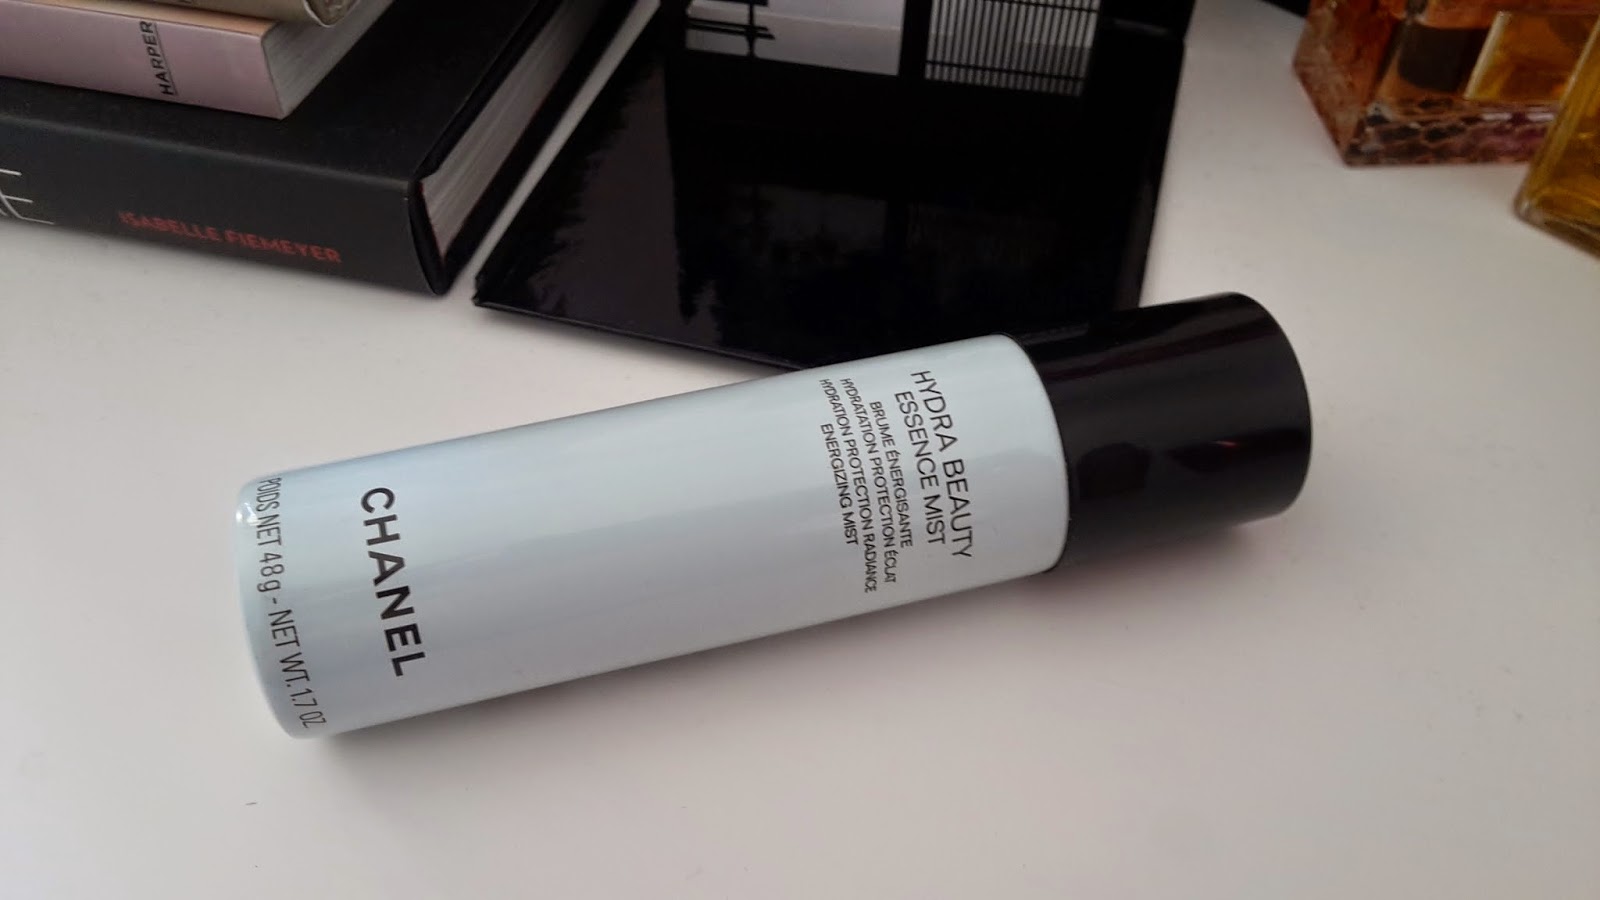 prodotti beauty skin care creme viso top 2014, chanel hydra beauty essence mist